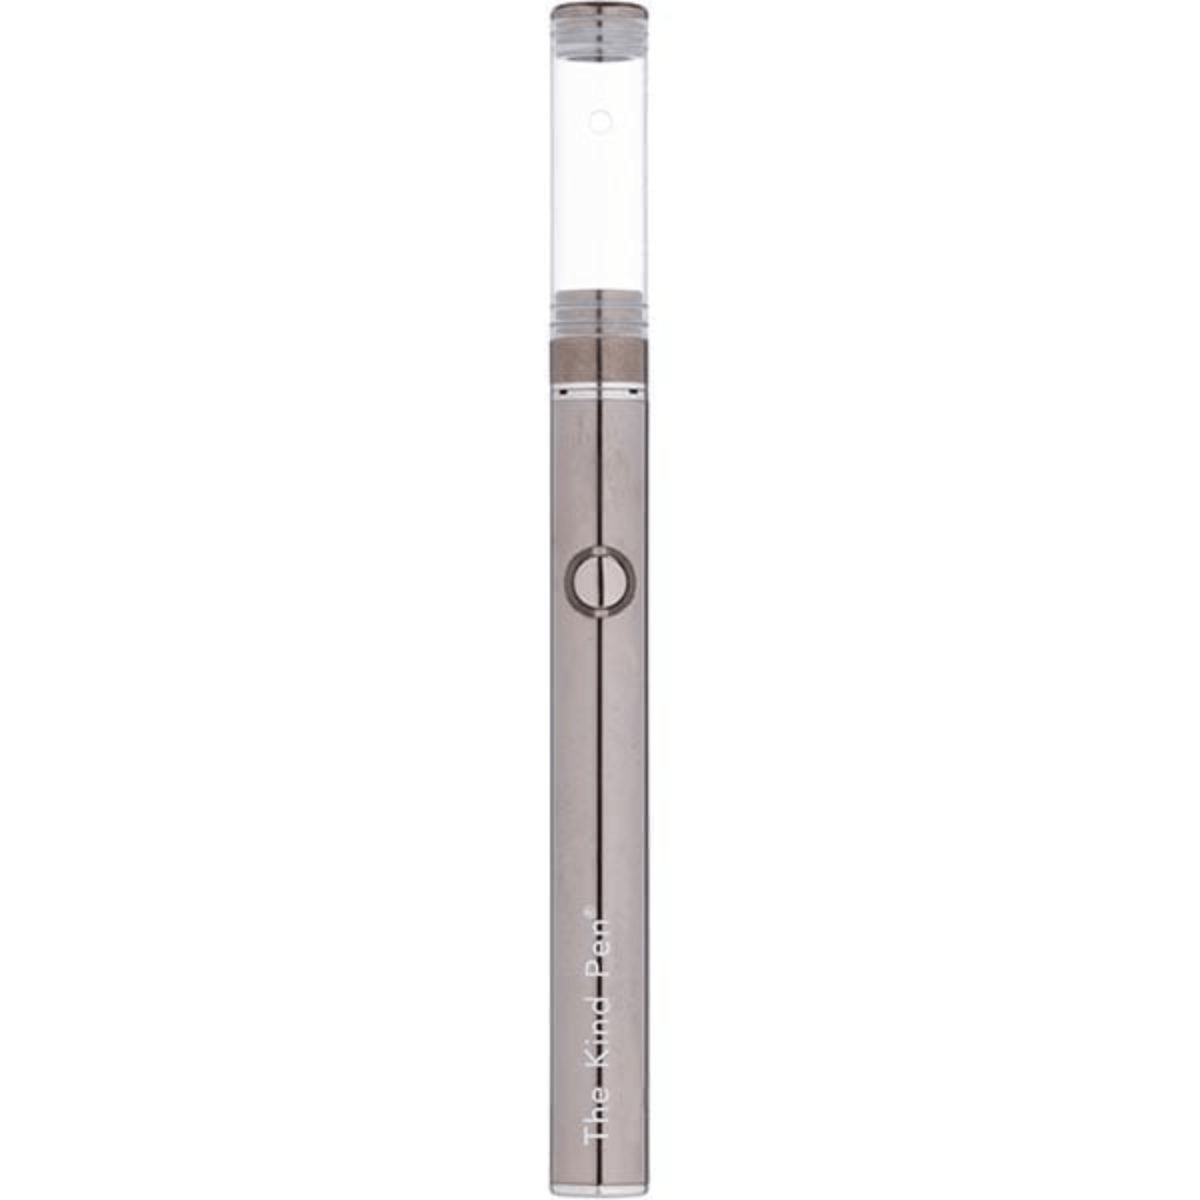 The Kind Pen Wax CBD Premium Pen image